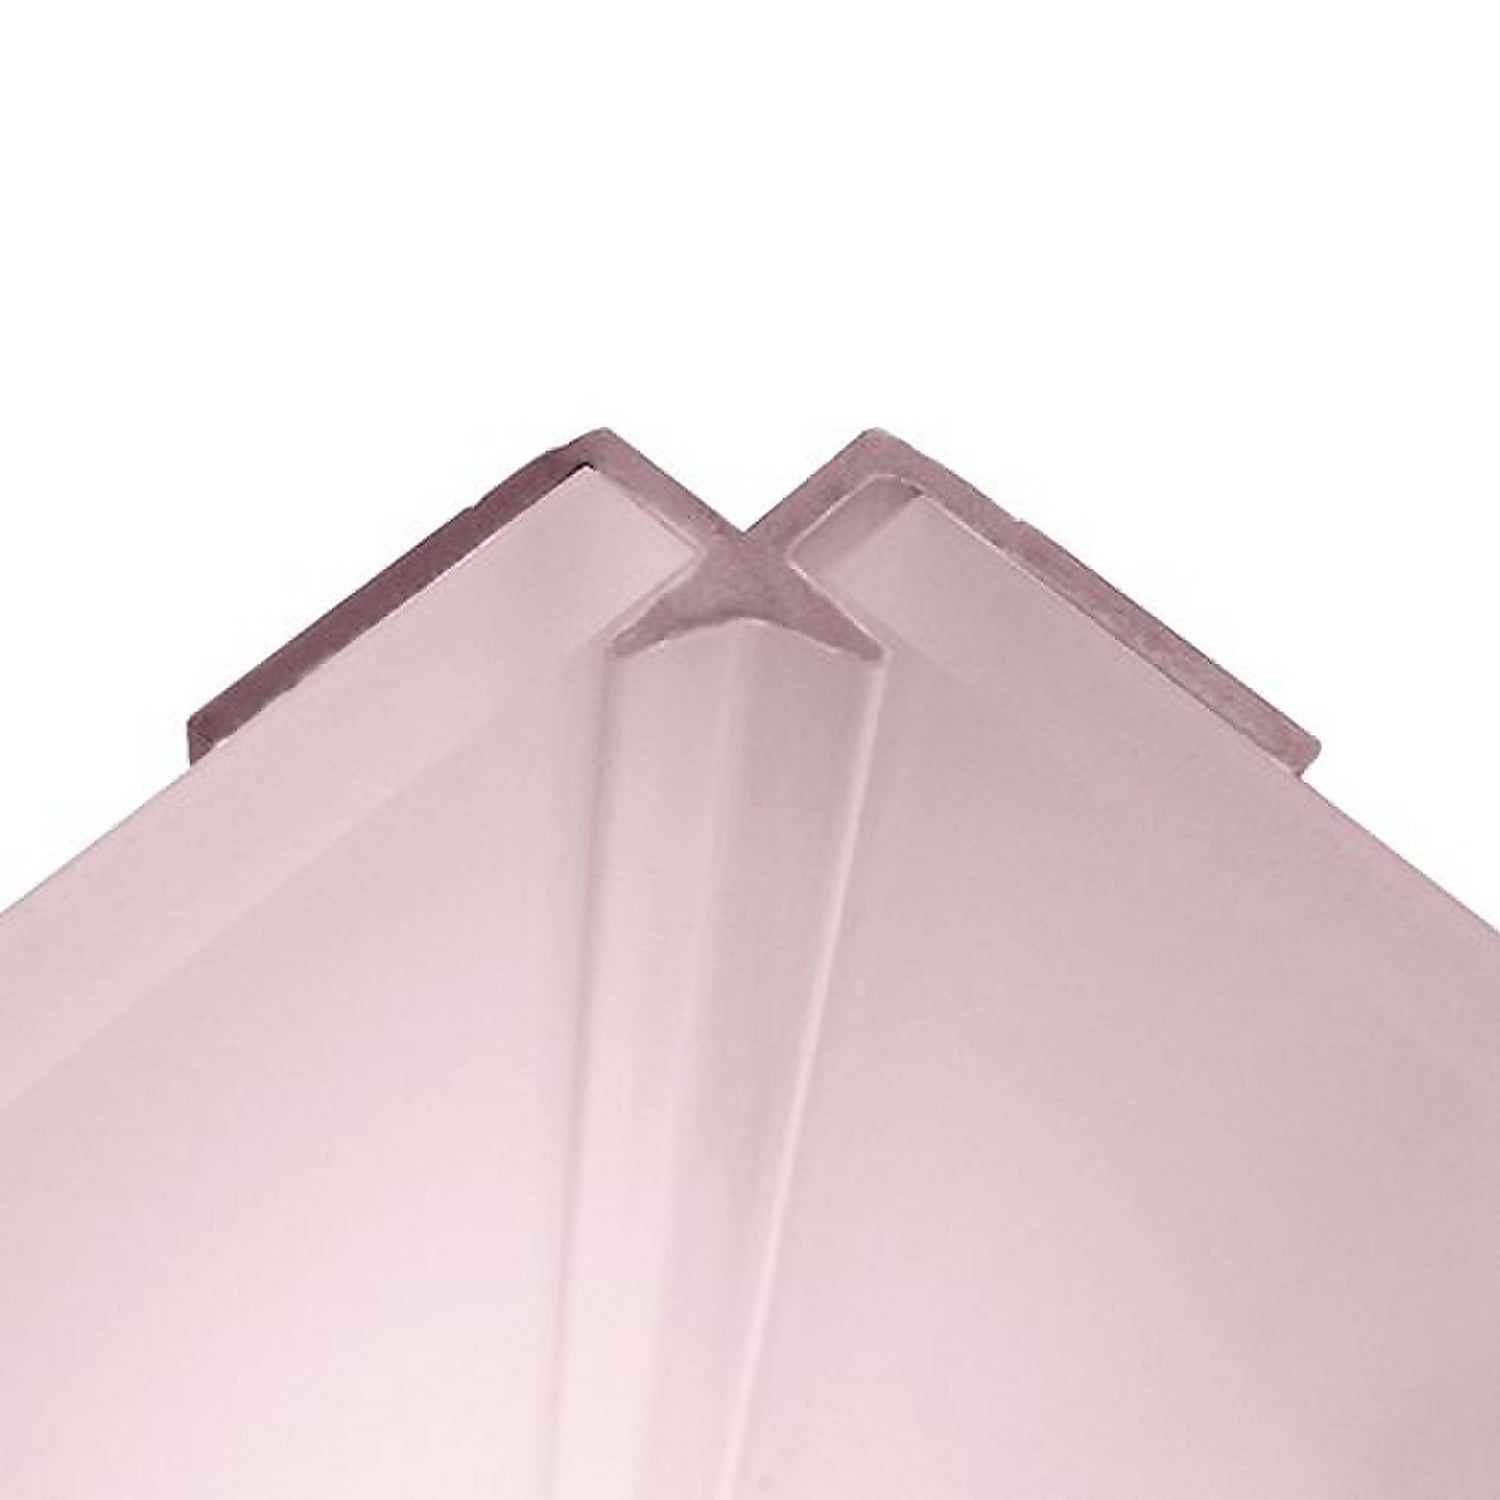 Wetwall Acrylic Internal Corner - Pale Pink